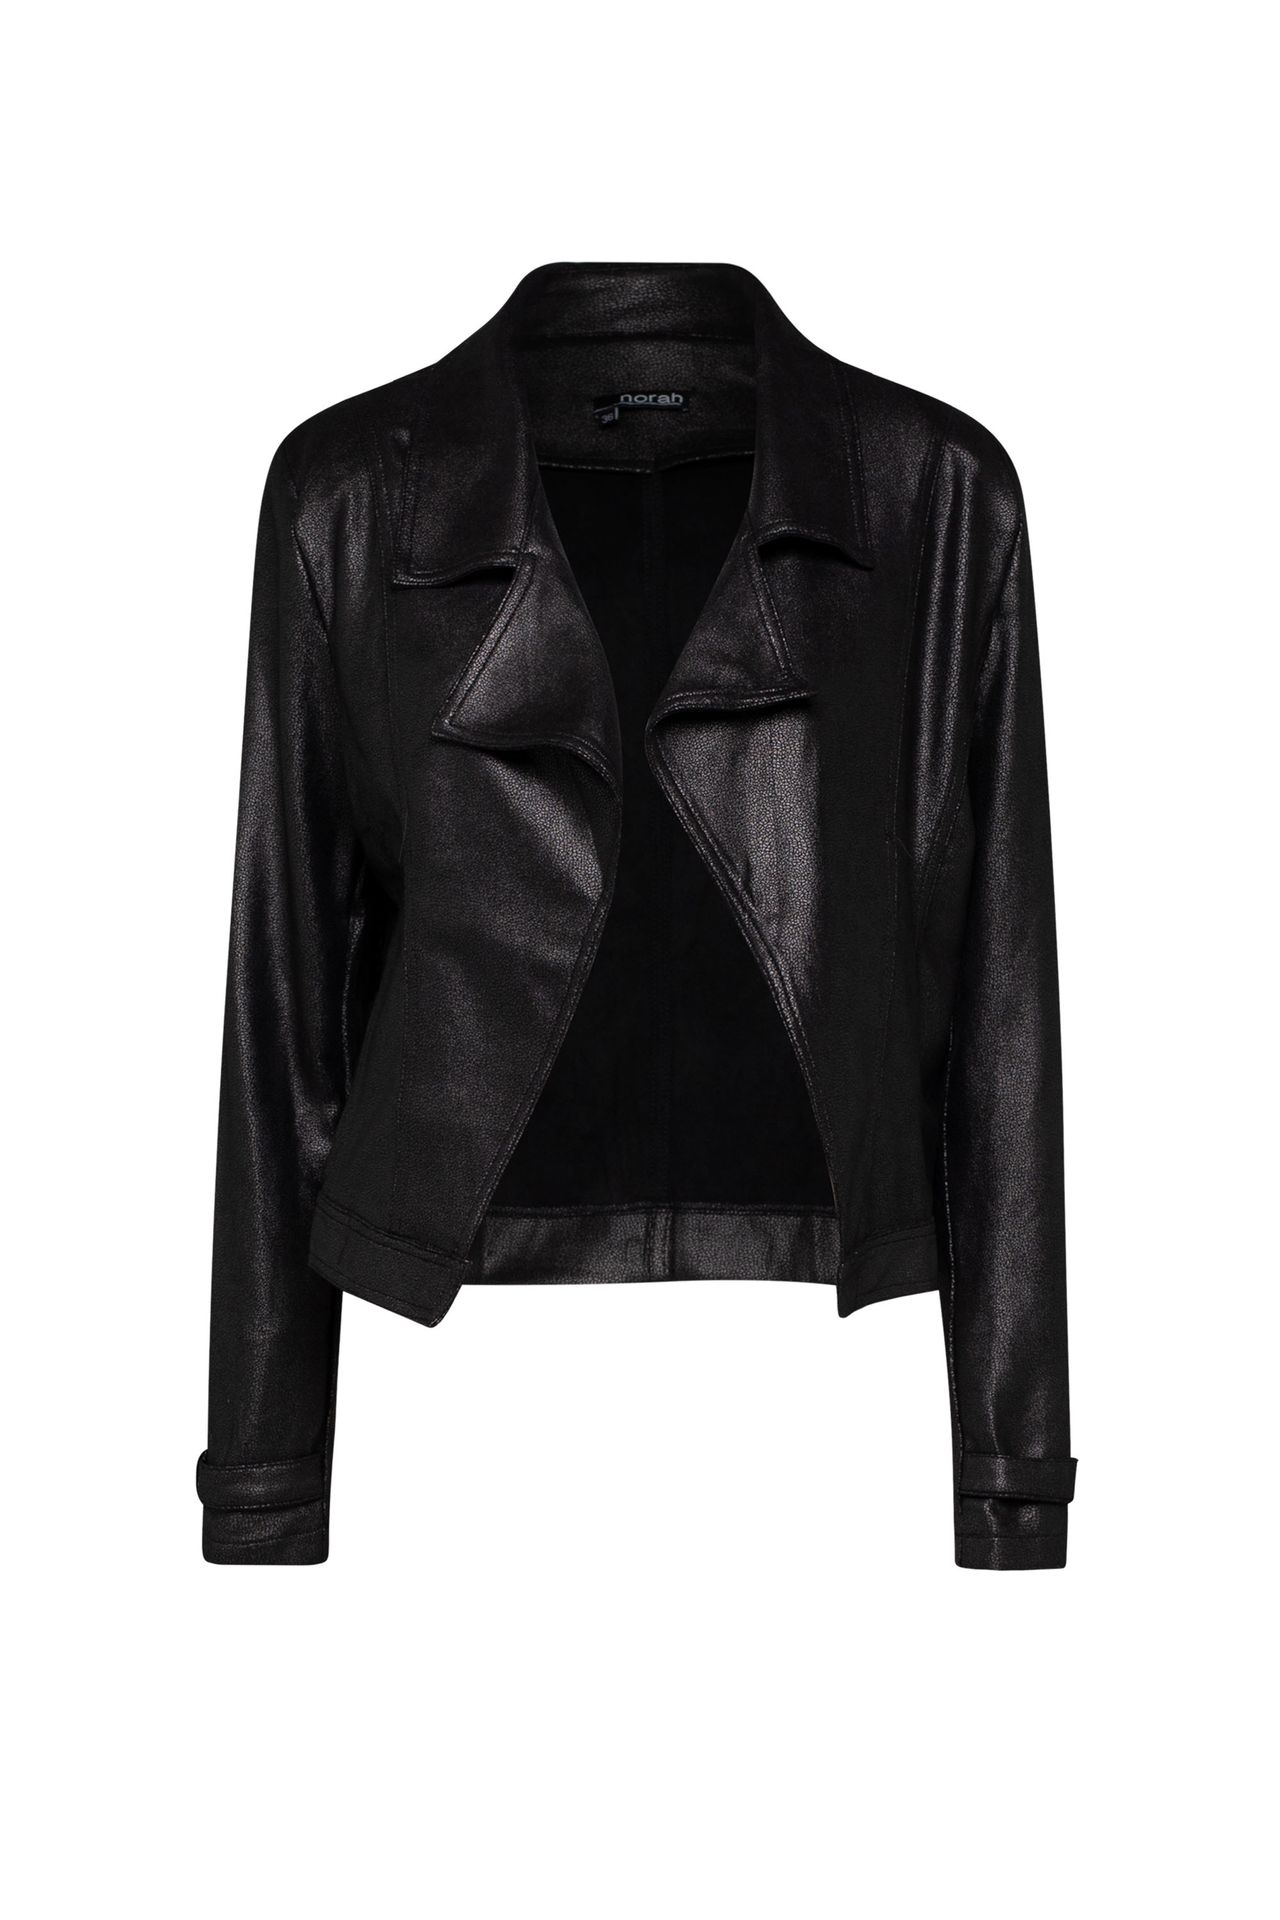  Jacket zwart black 212265-001